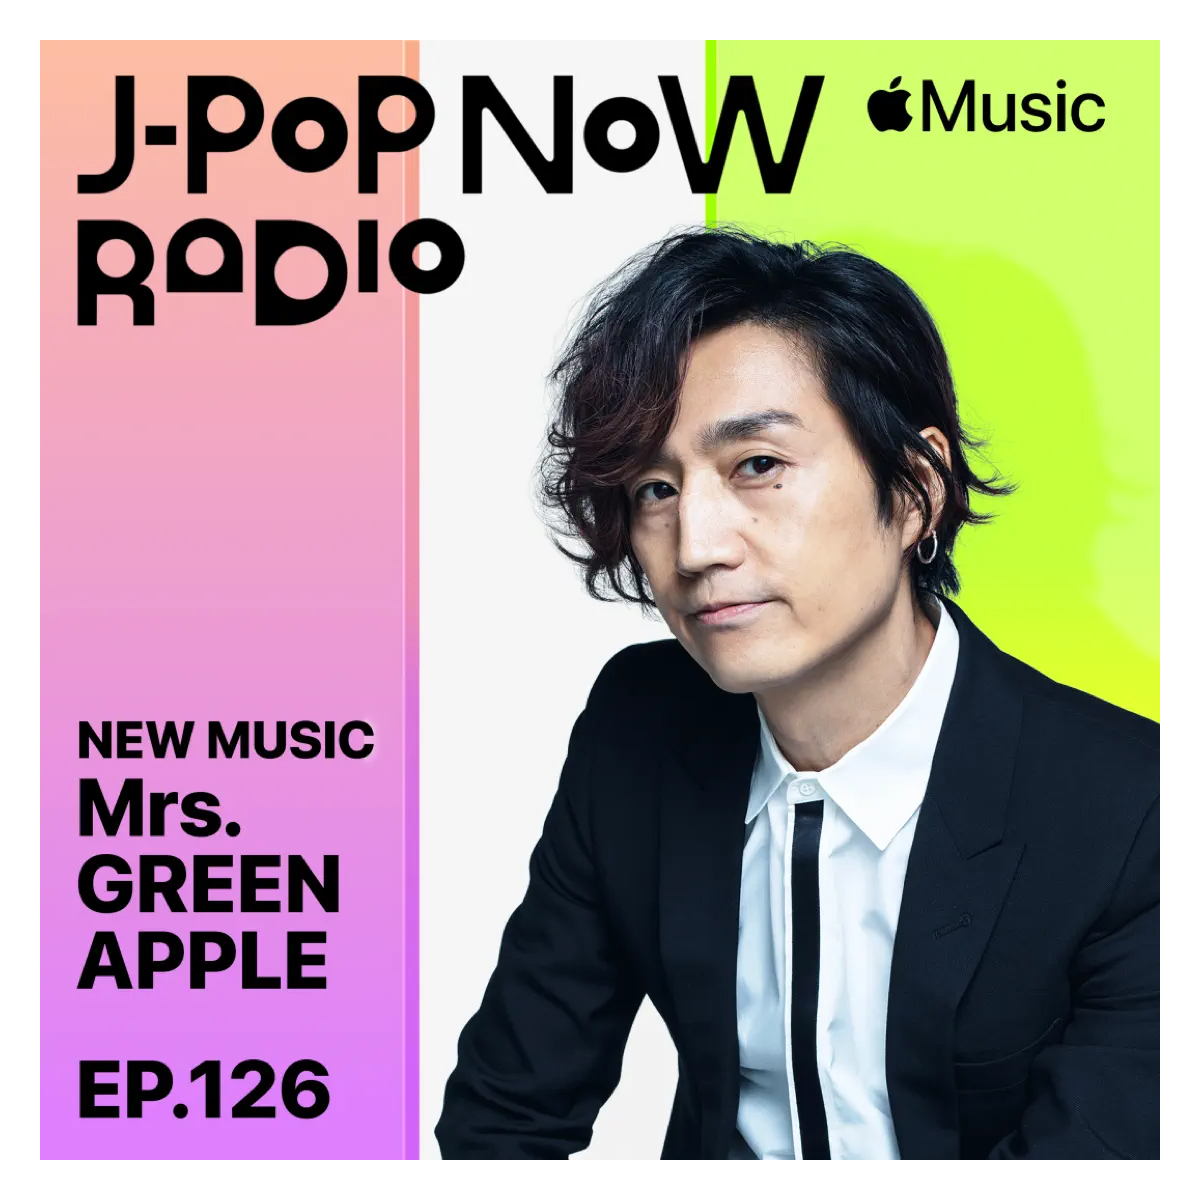 J-Pop Now Radio with Kentaro Ochiai 特集：Mrs. GREEN APPLE